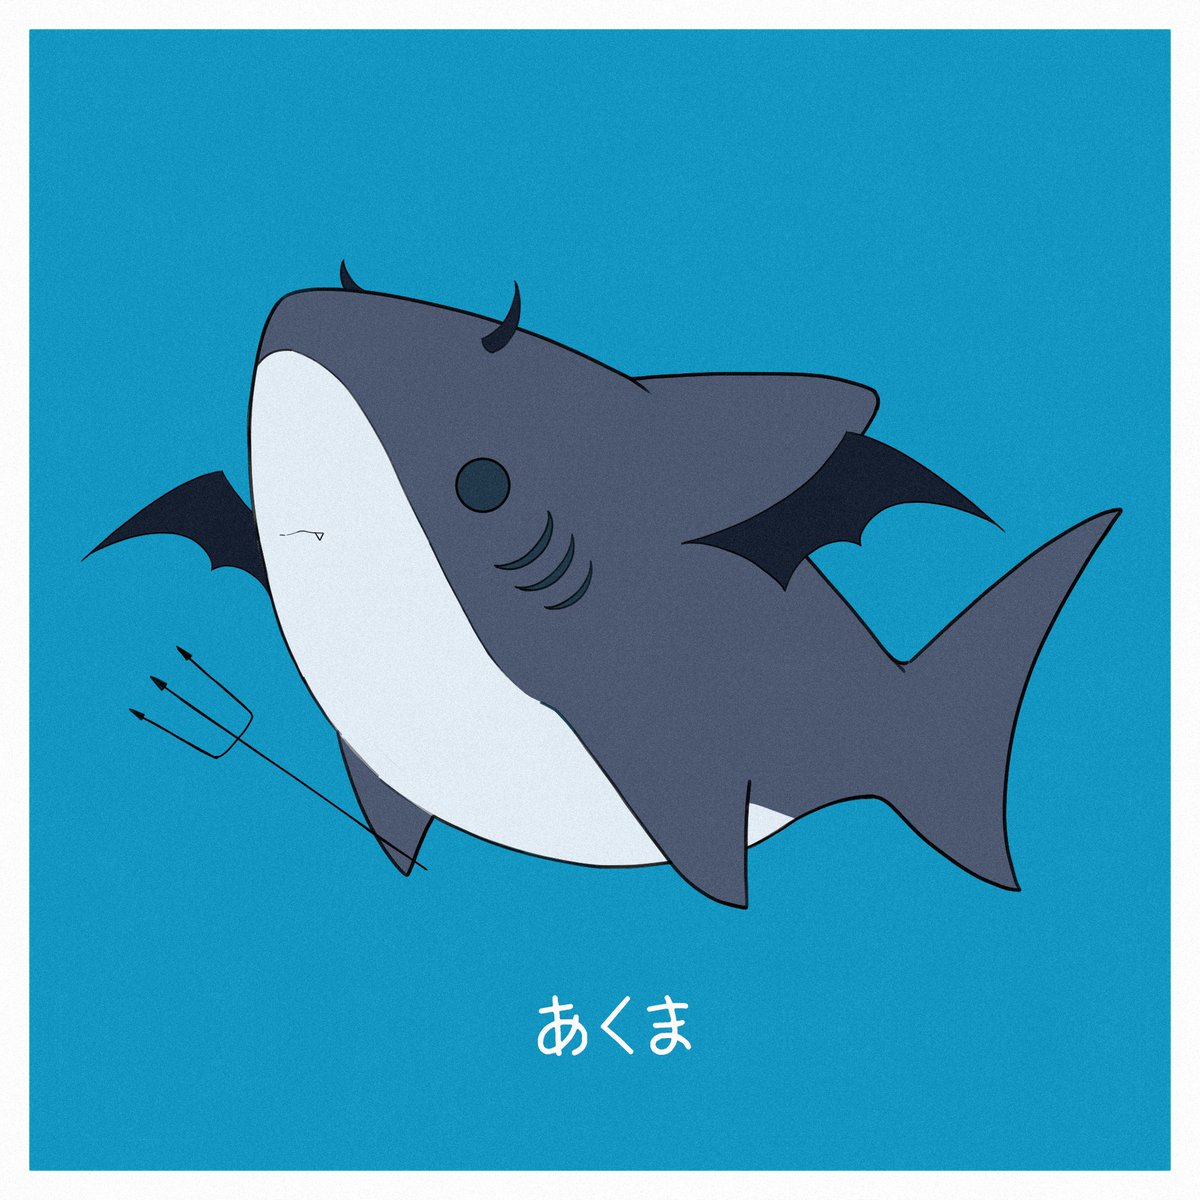 no humans border trident white border simple background blue background shark  illustration images